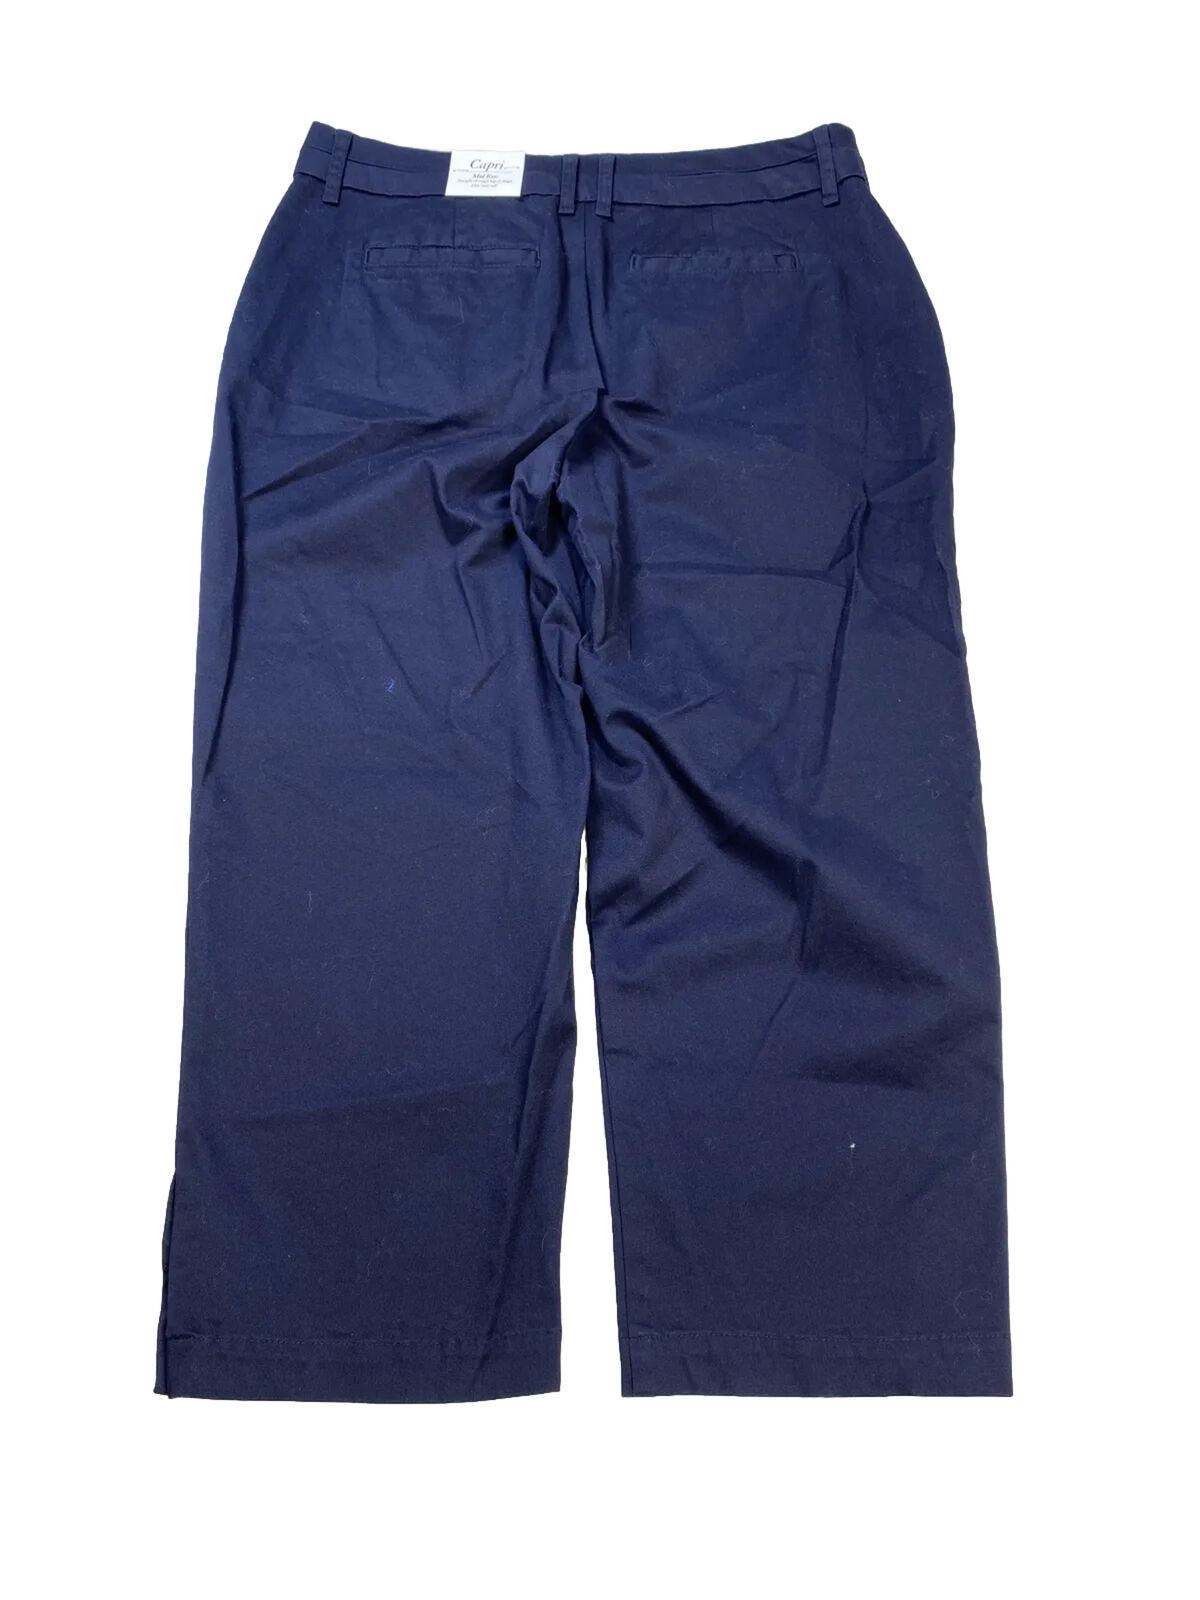 NEW Croft and Barrow Women's Blue Stretch Mid Rise Capri Pants - 8